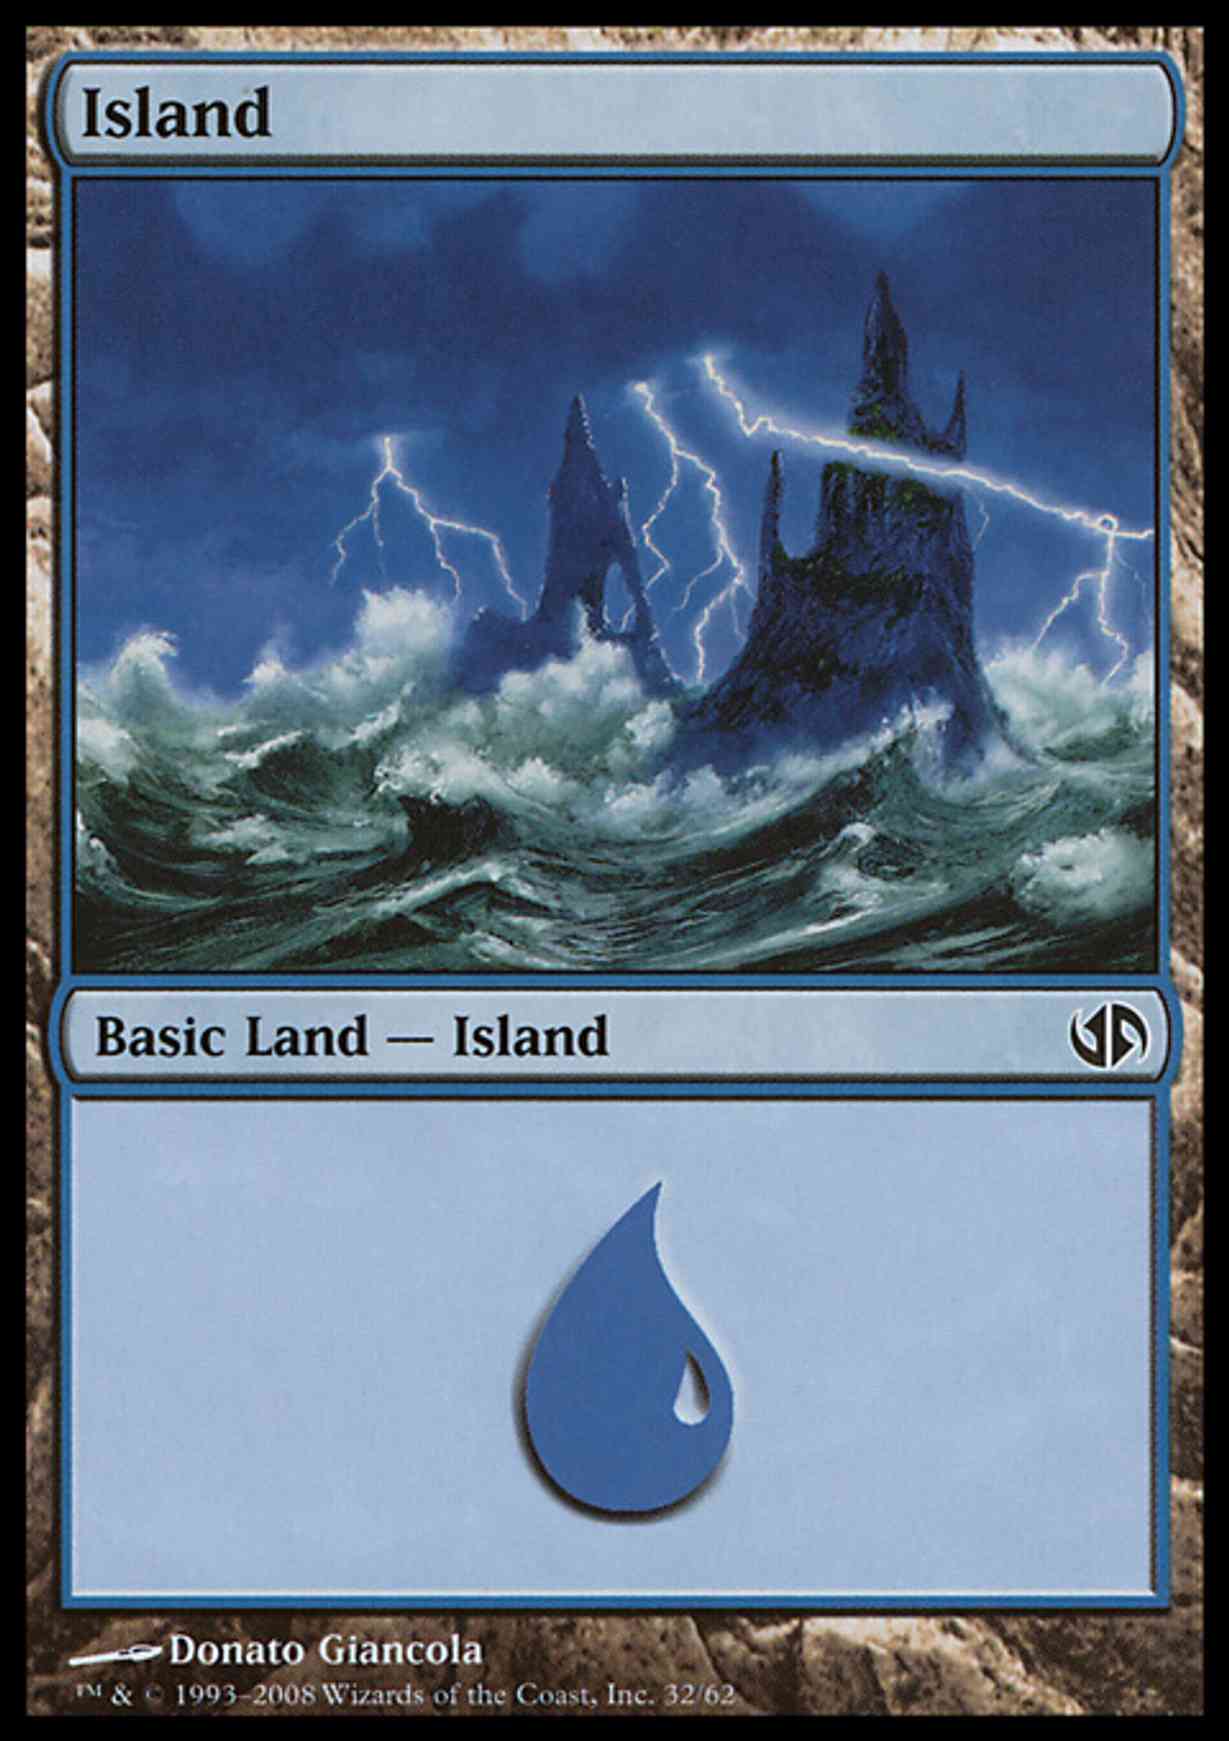 Island (32)  magic card front